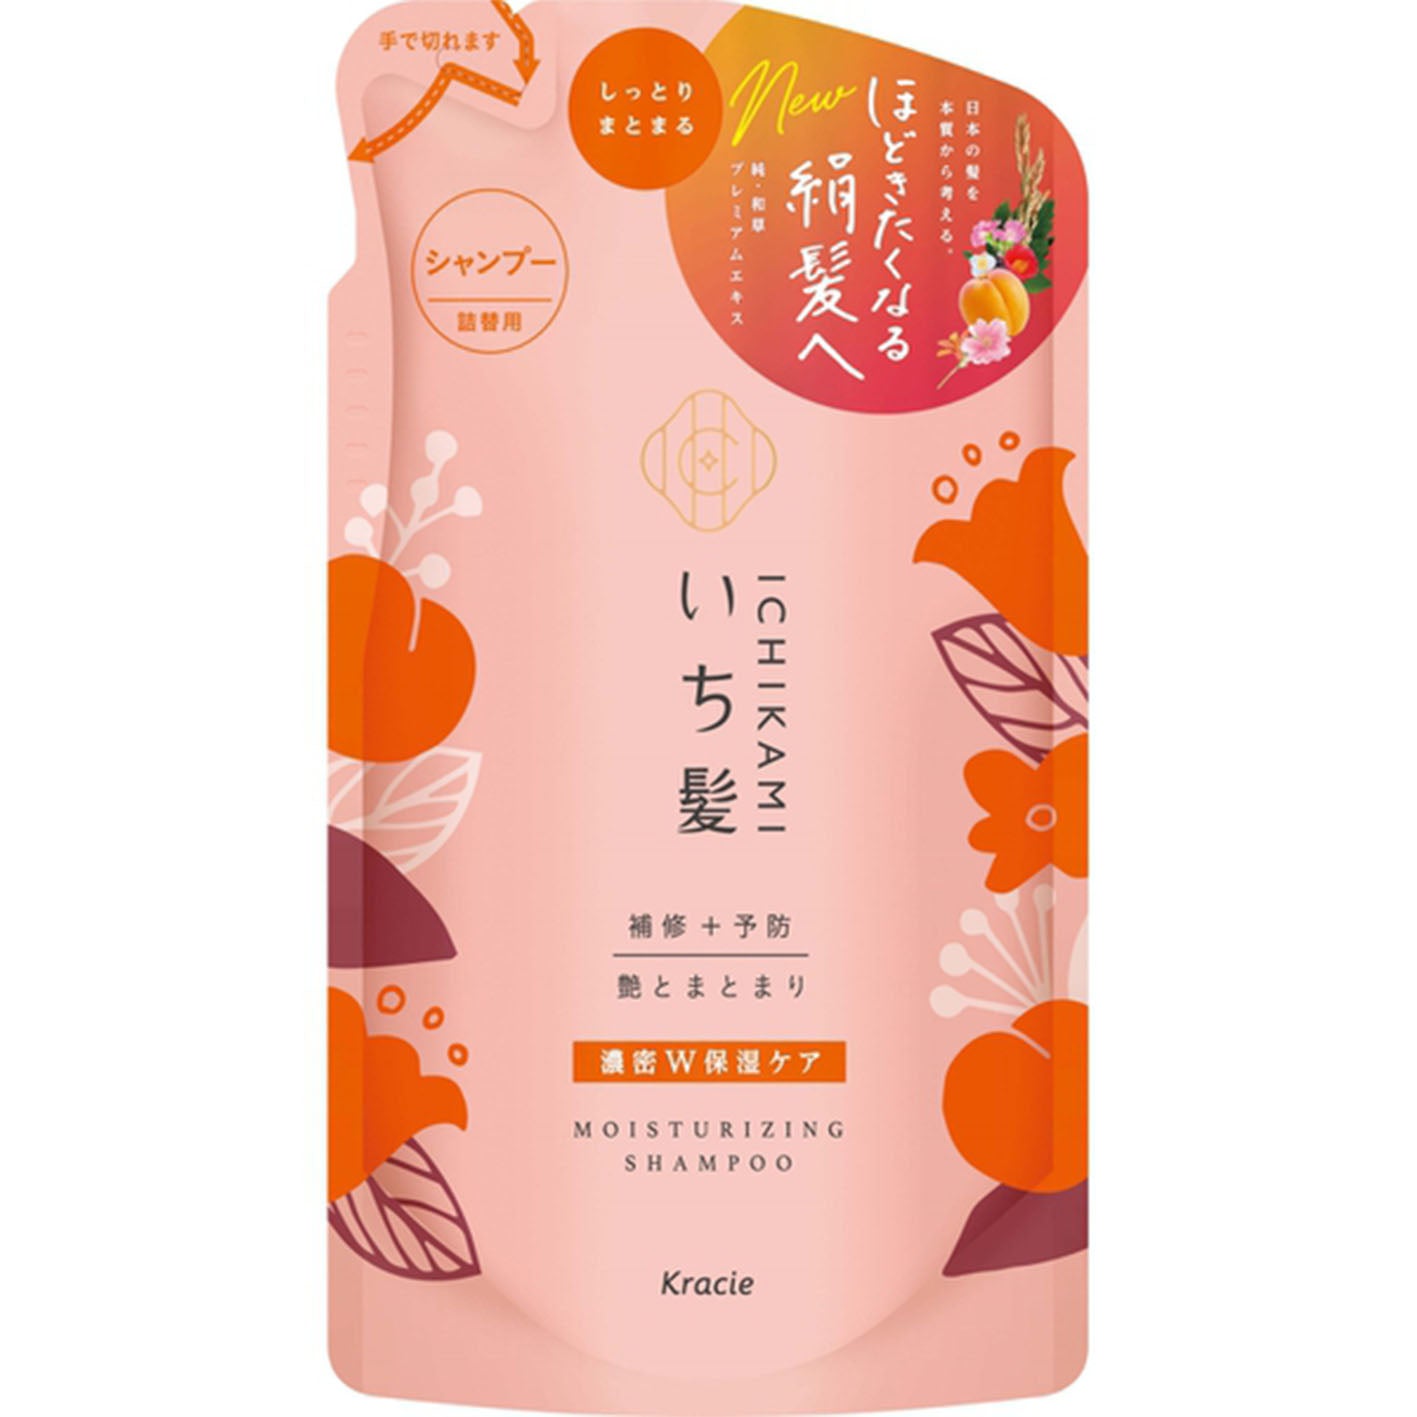 Ichikami Dense W Moisturizing Care Hair Shampoo Pump - 330ml - Refill - Harajuku Culture Japan - Japanease Products Store Beauty and Stationery